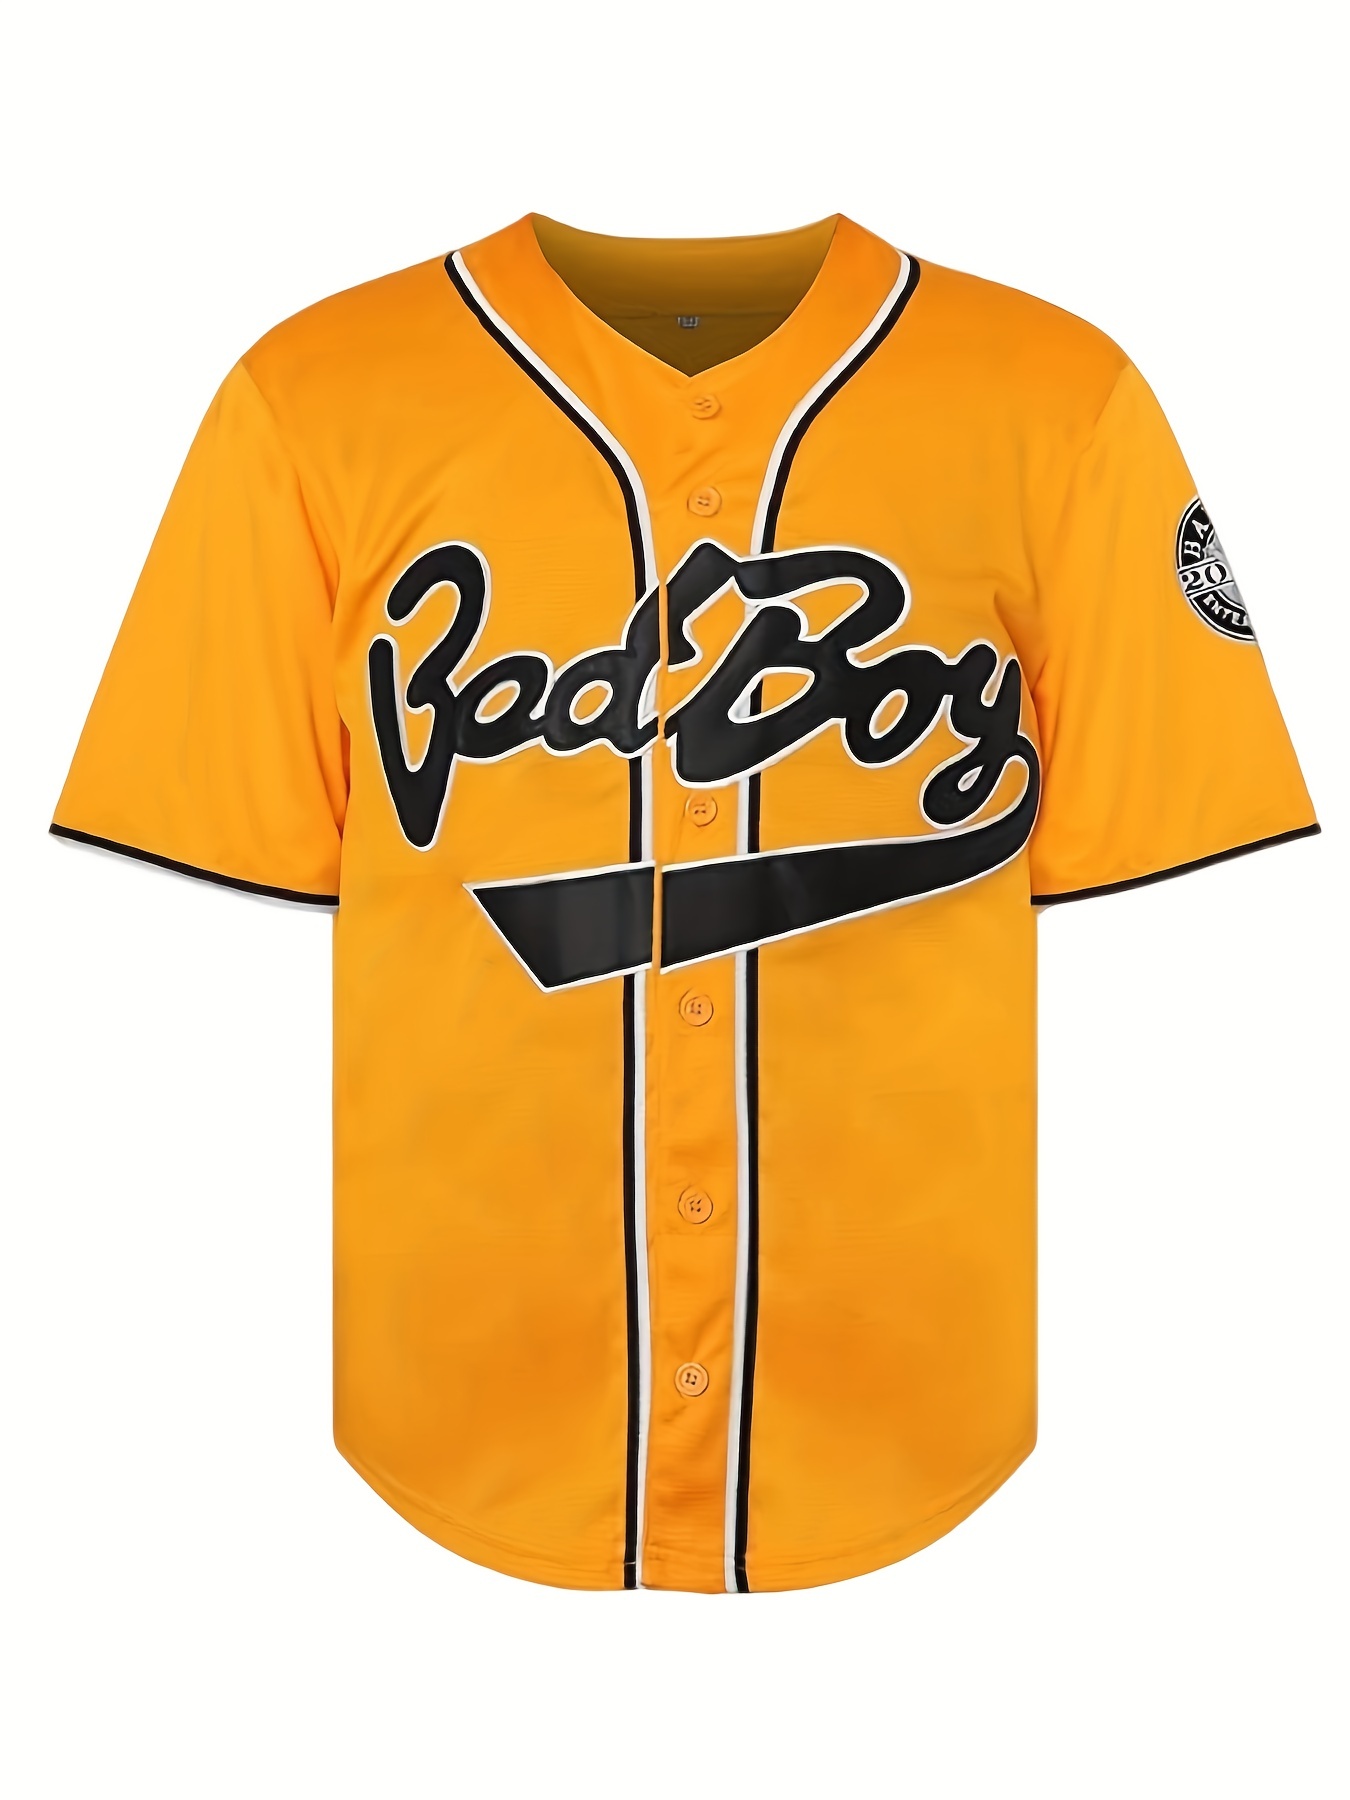 Men's Smalls Jersey #10 Bad Boy 90s Hip Hop Clothing Black White Stitched Movie Baseball Jersey